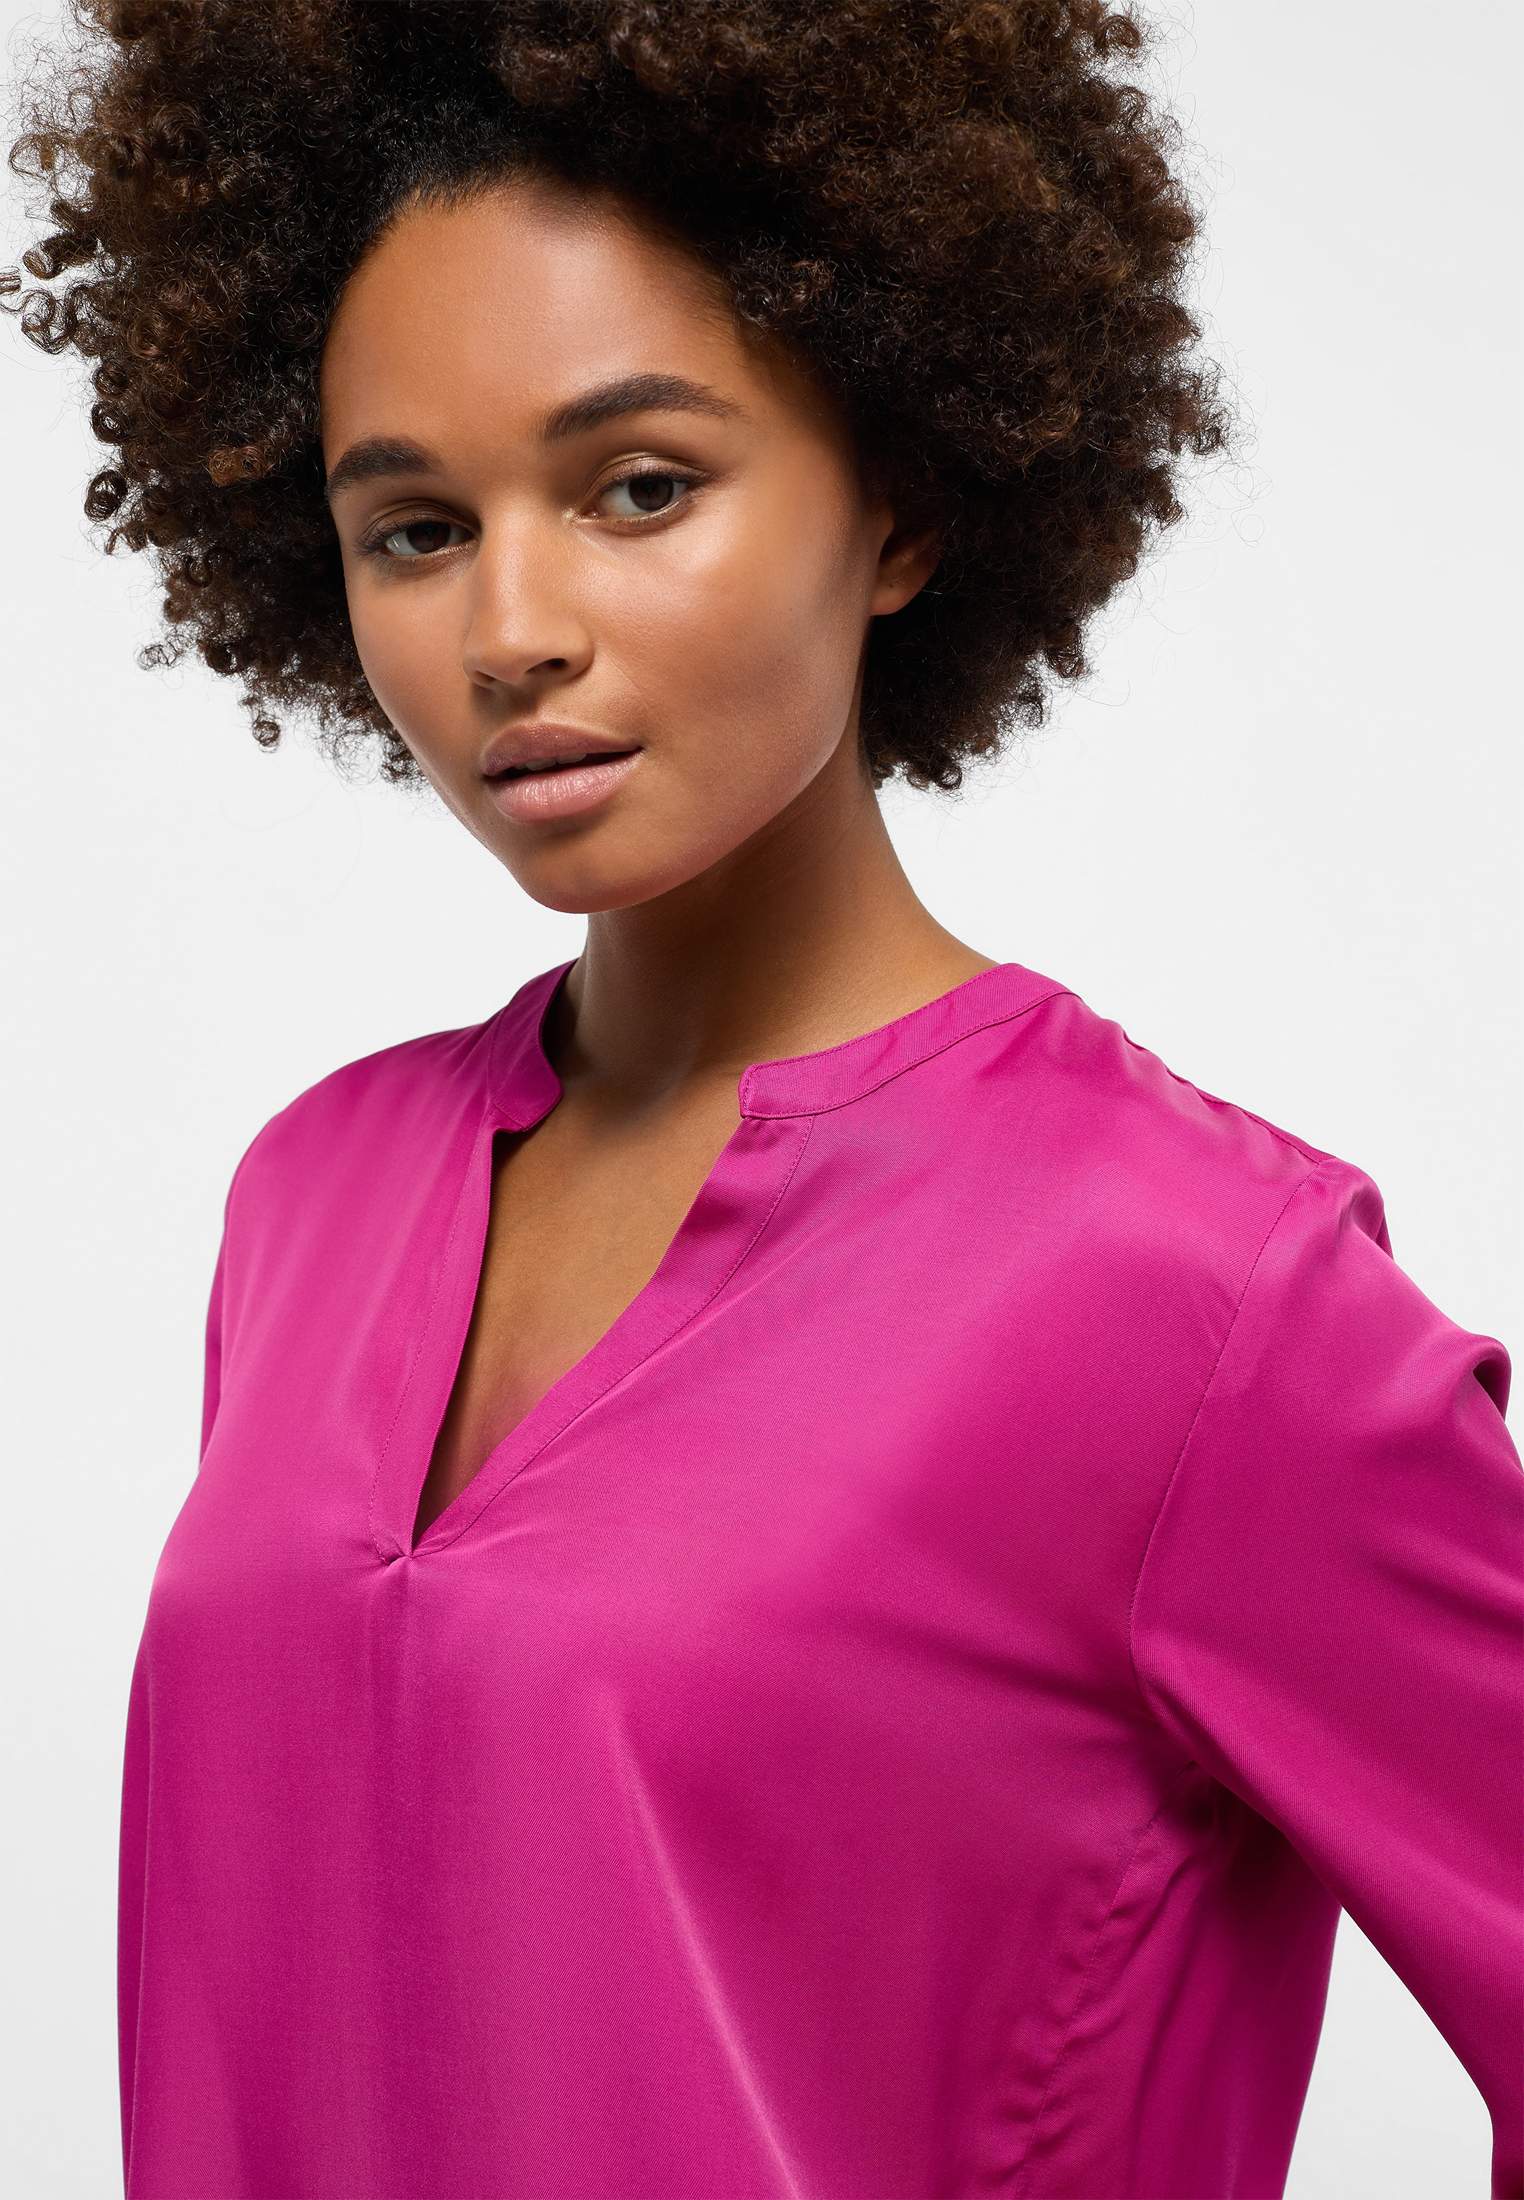 Viscose Shirt Bluse | 2BL00329-15-31-34-1/1 34 in vibrant Langarm vibrant pink | | pink unifarben 